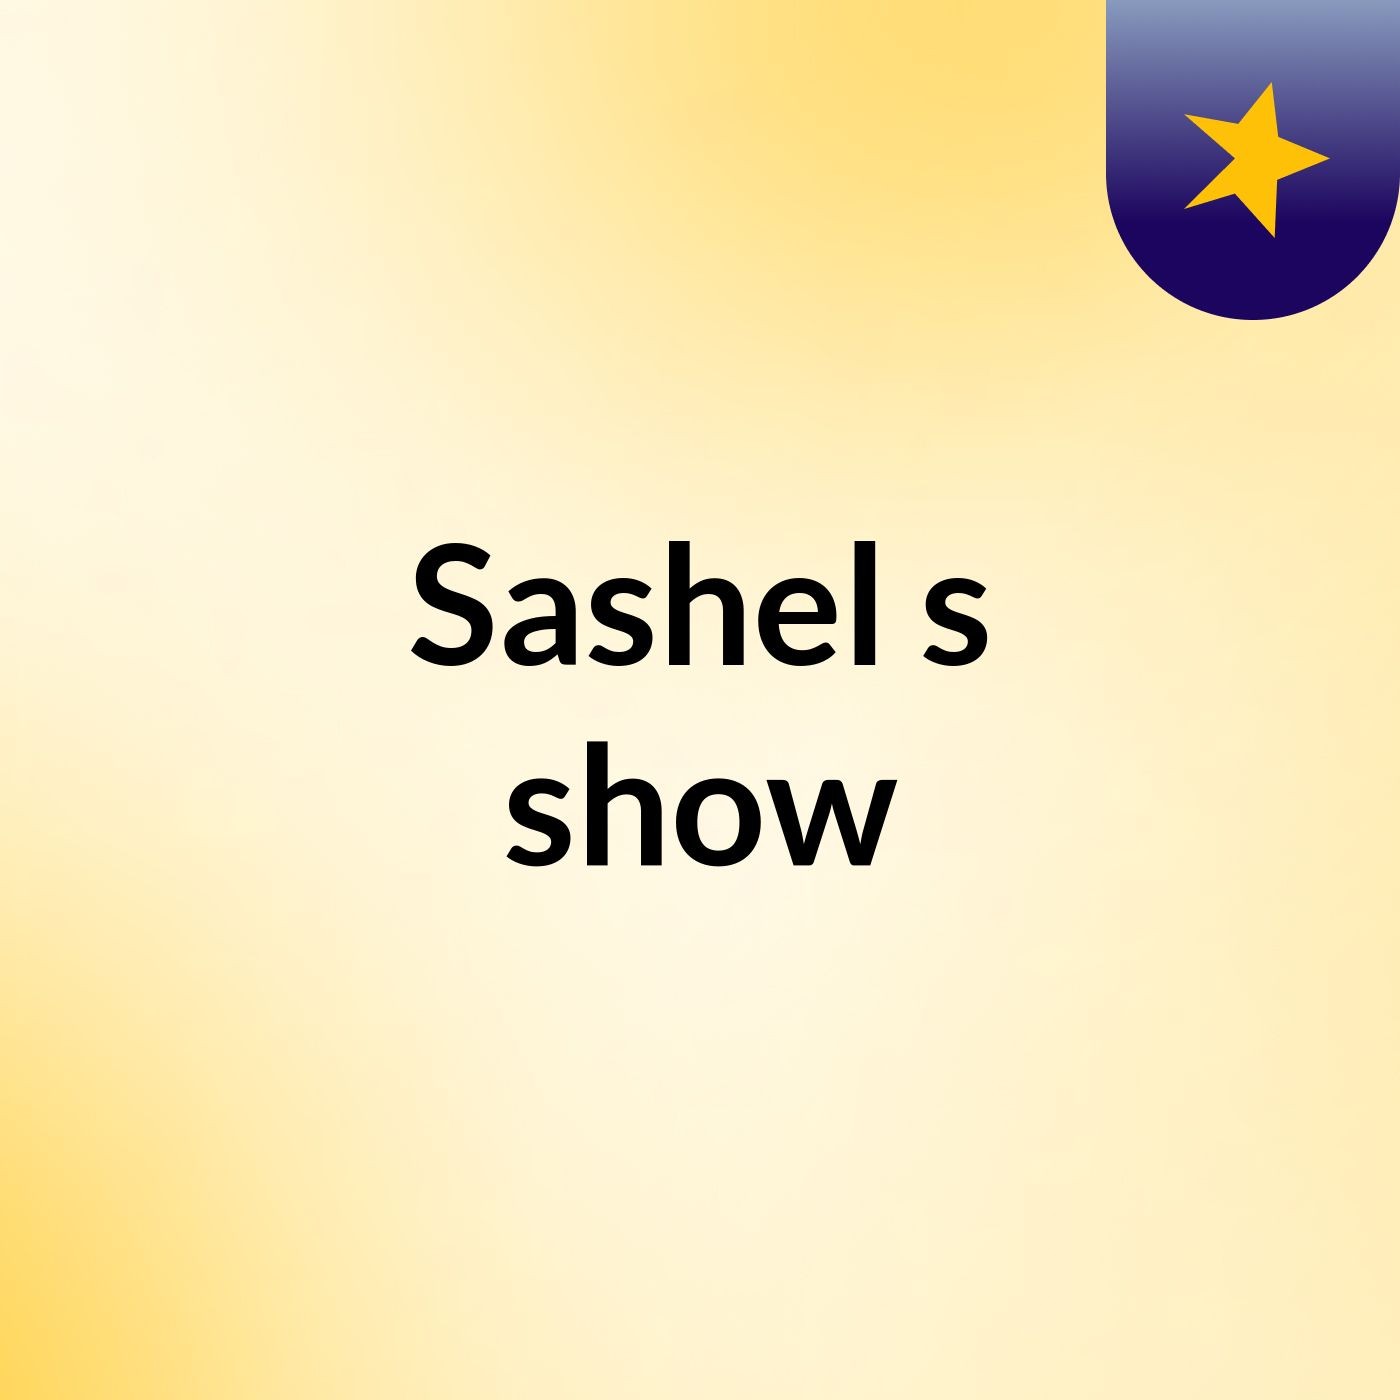 Sashel's show